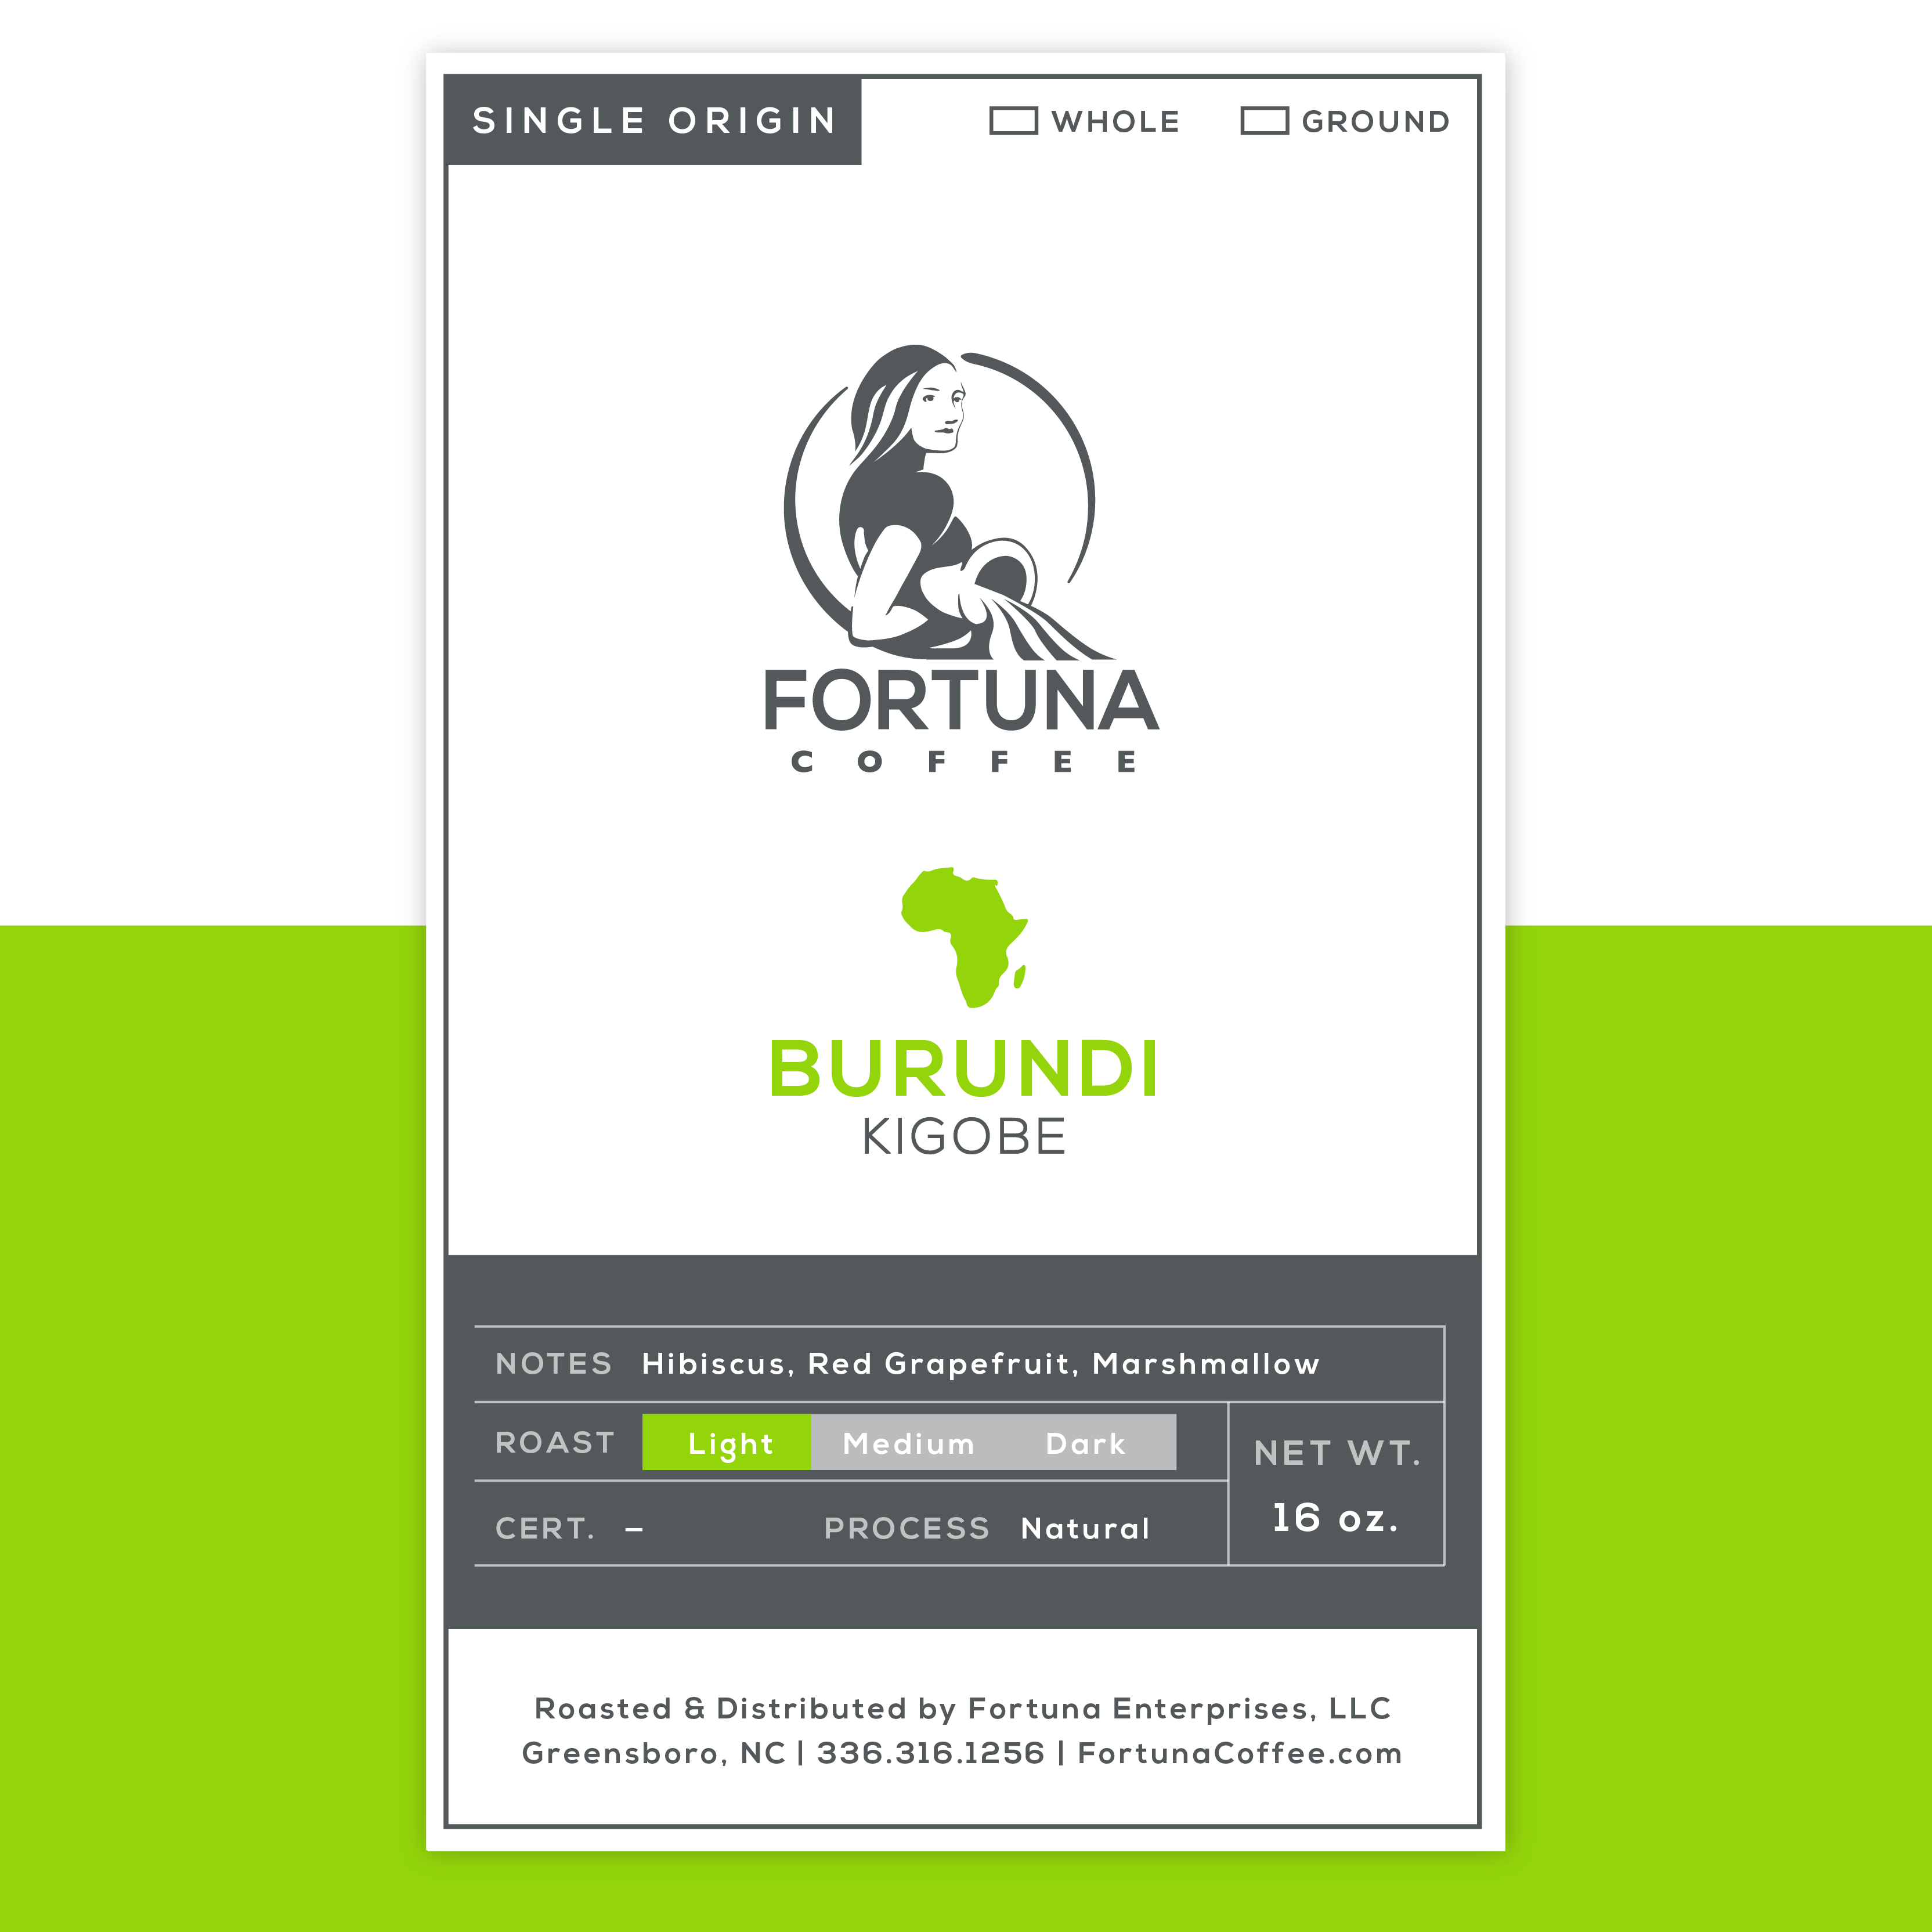 Burundi Kigobe - Fortuna Coffee